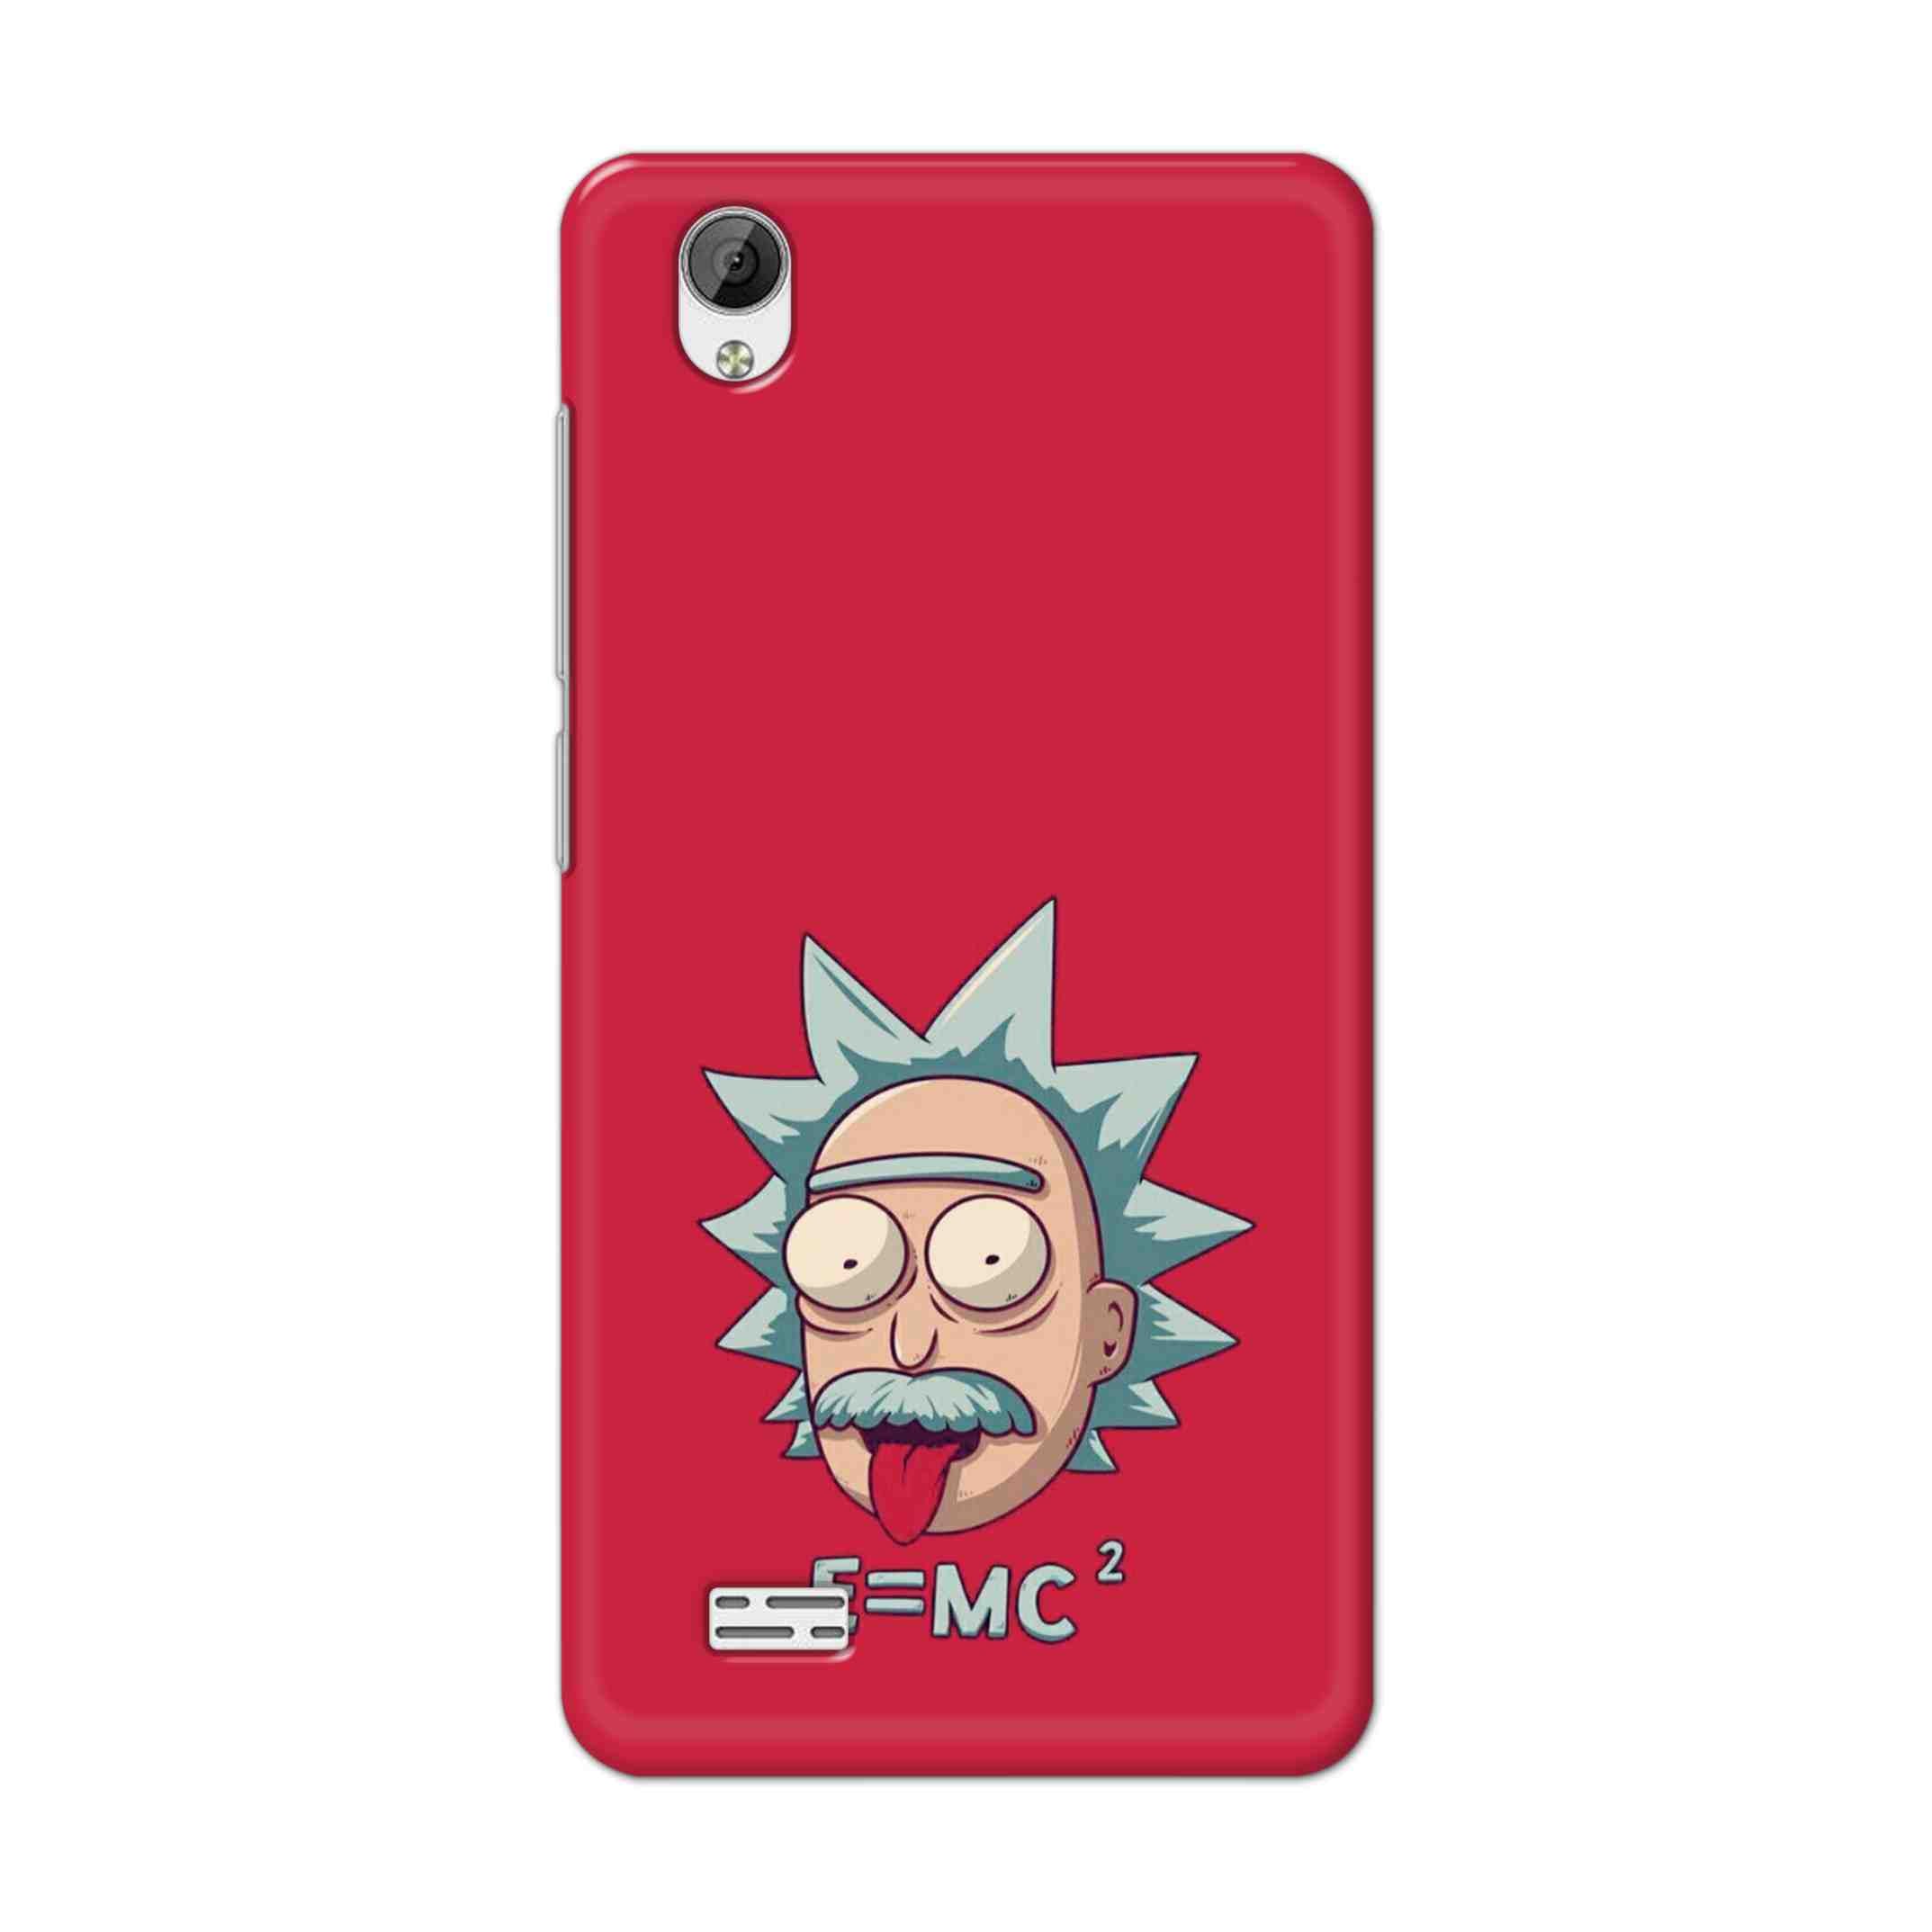 Buy E=Mc Hard Back Mobile Phone Case Cover For Vivo Y31 Online